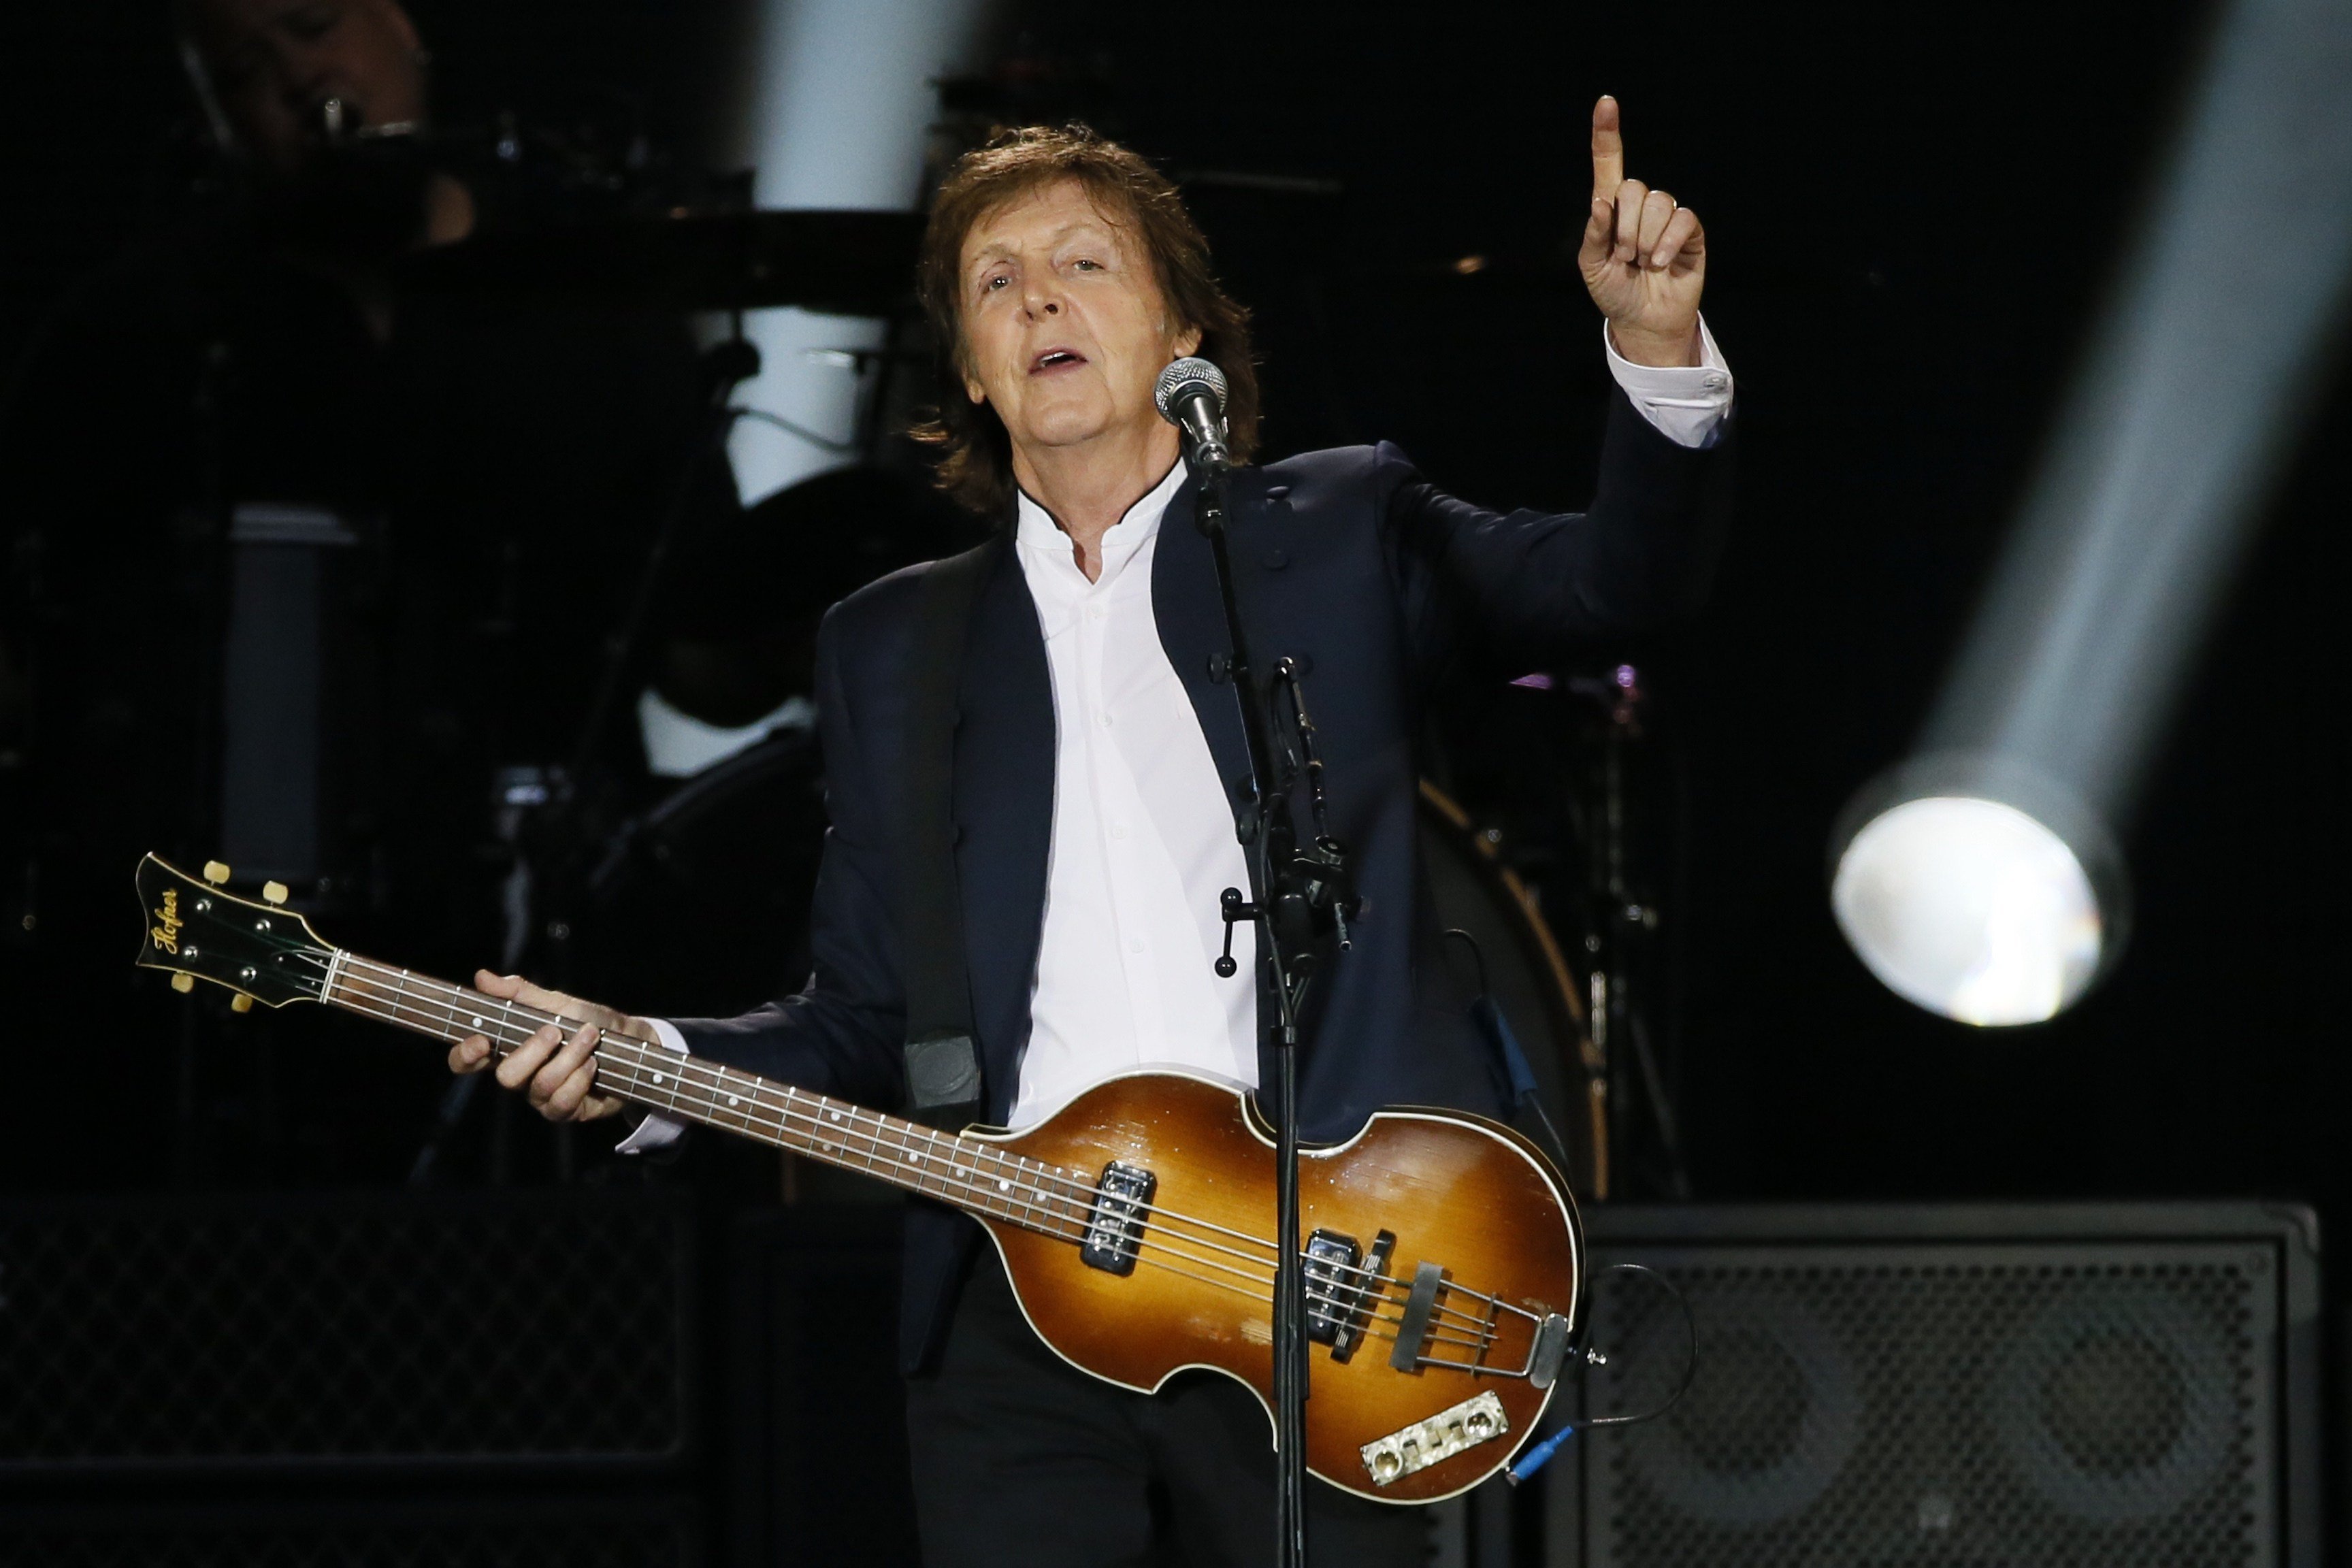 Paul McCartney performs at the Stade de France near Paris, France